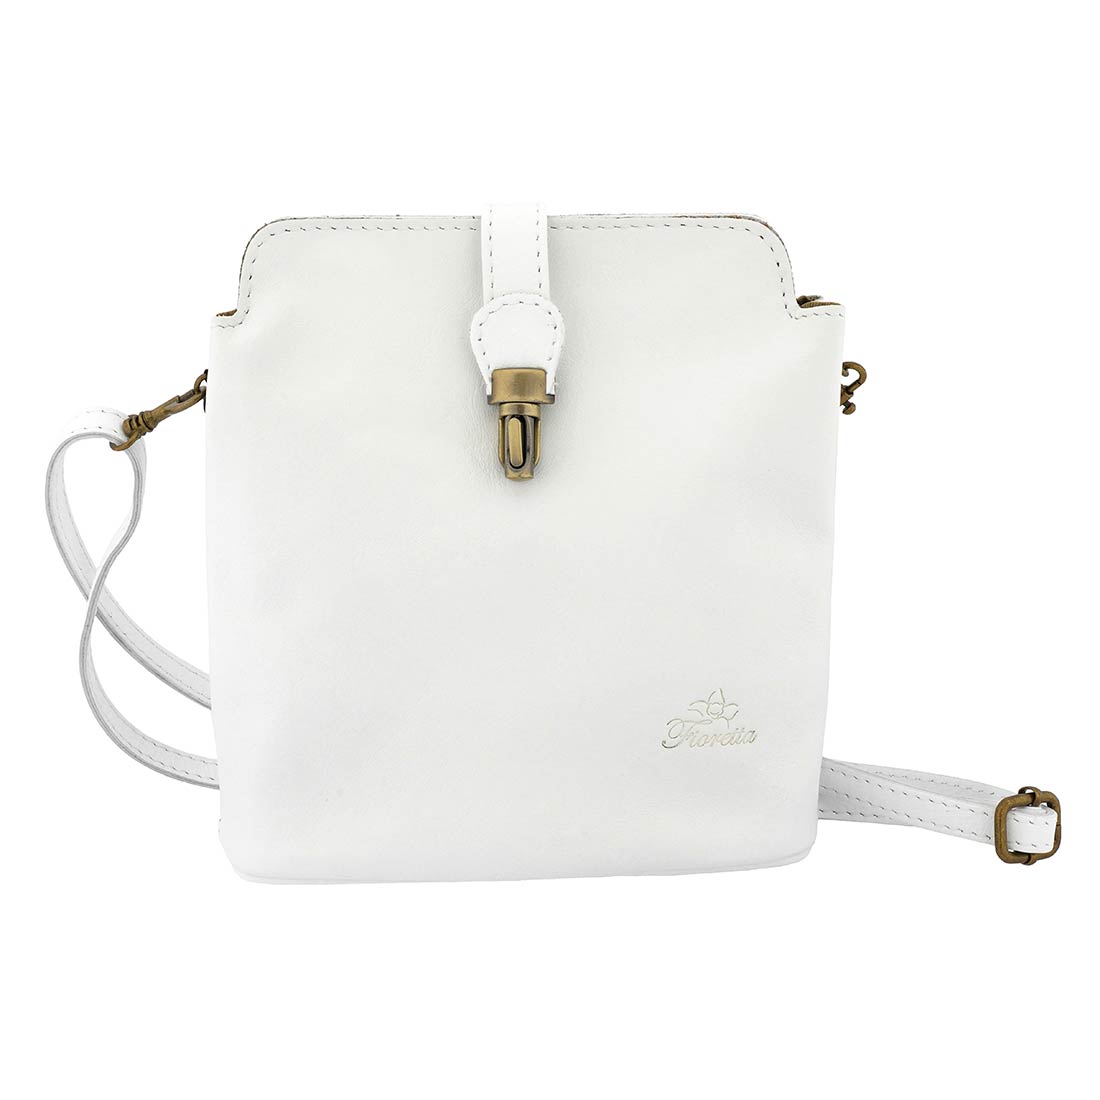 White Crossbody Bag | Chic and Trendy